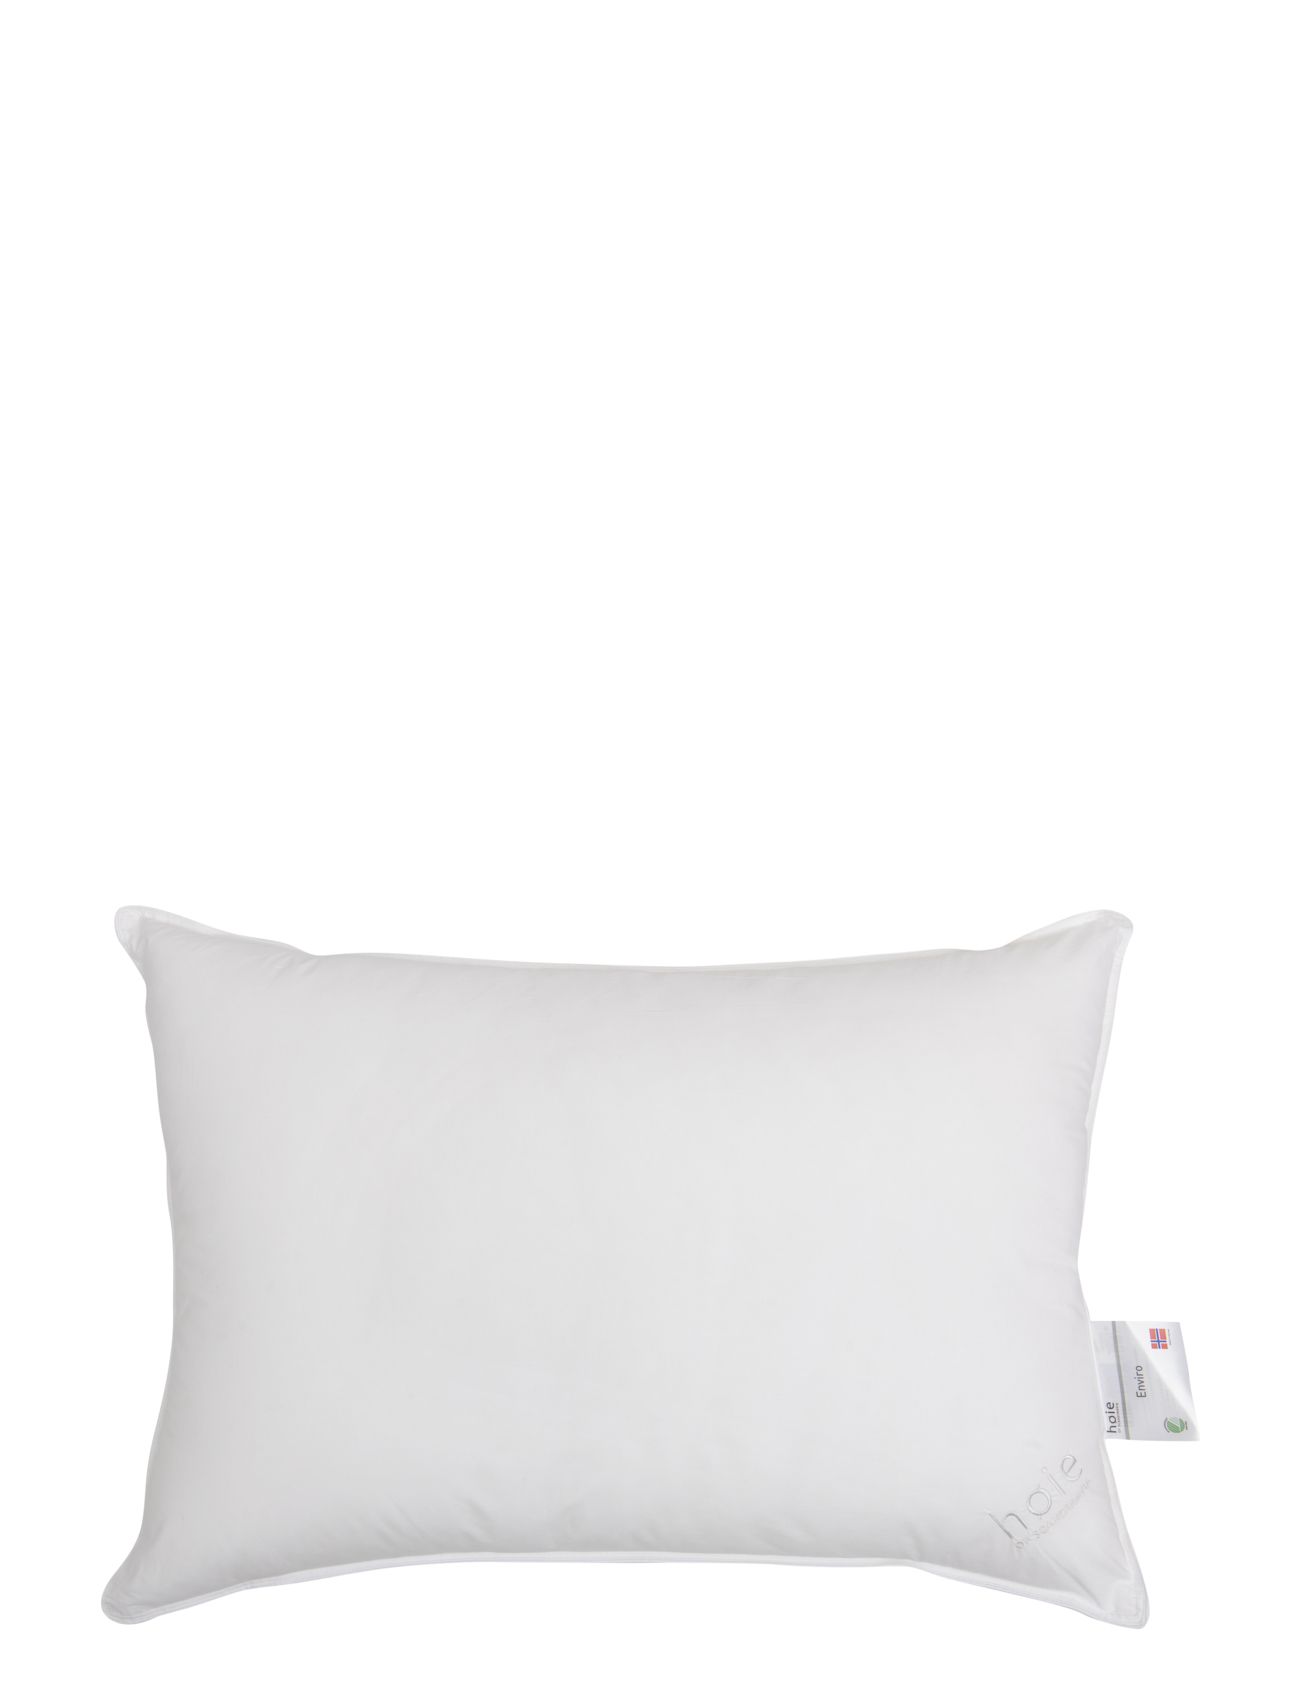 Enviro Medel Hög Kudde Home Textiles Bedtextiles Pillows White Høie Of Scandinavia